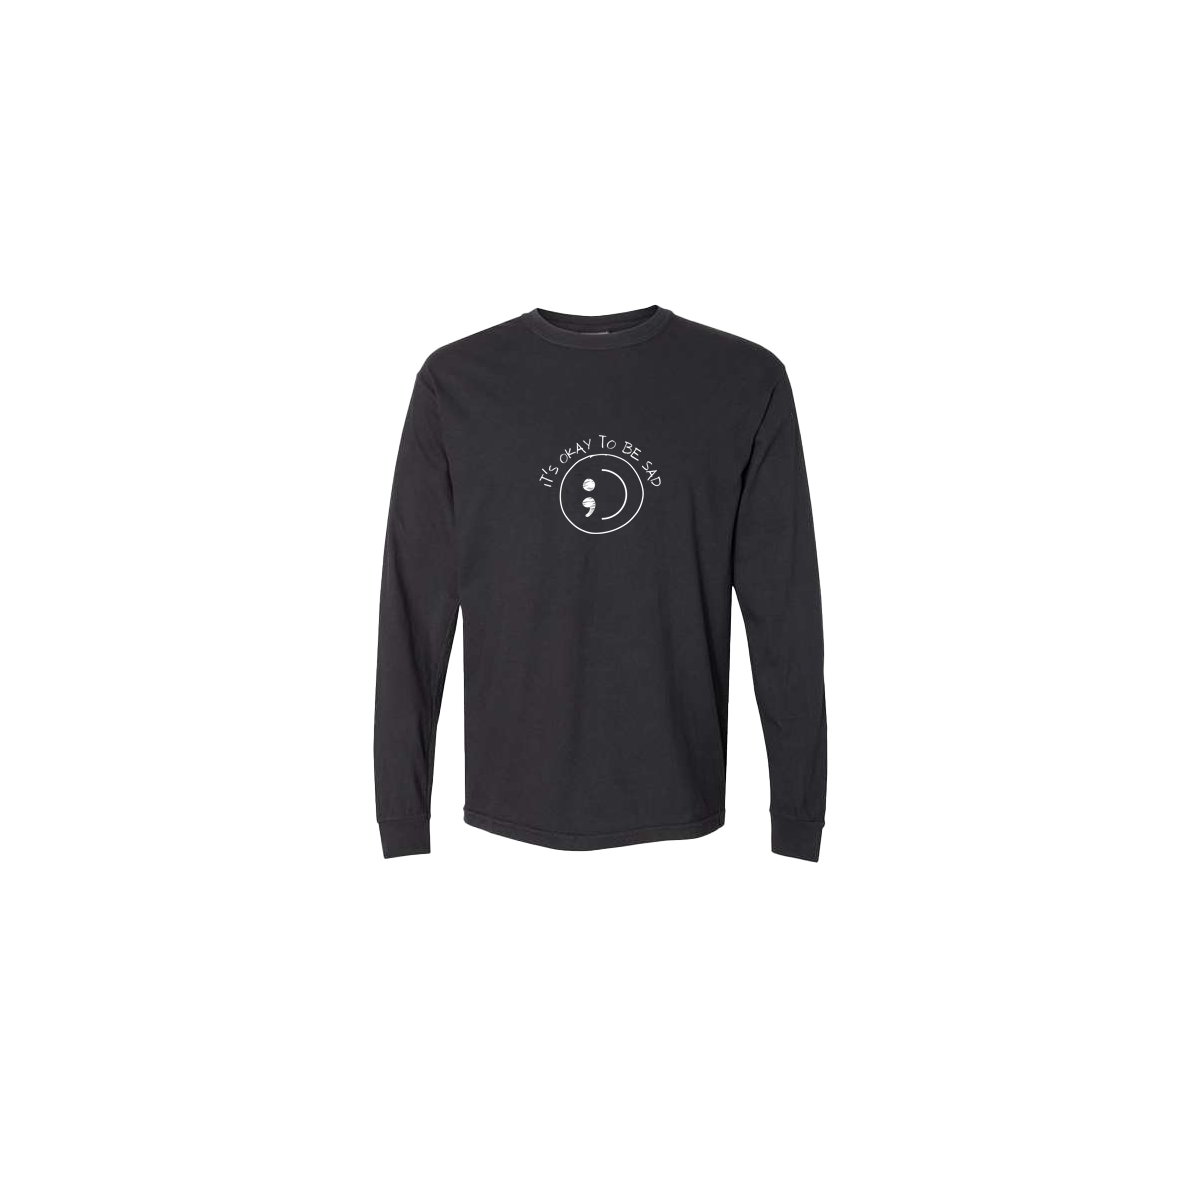 It's Okay to be Sad Embroidered Black Long Sleeve Tshirt - Mental Health Awareness Clothing